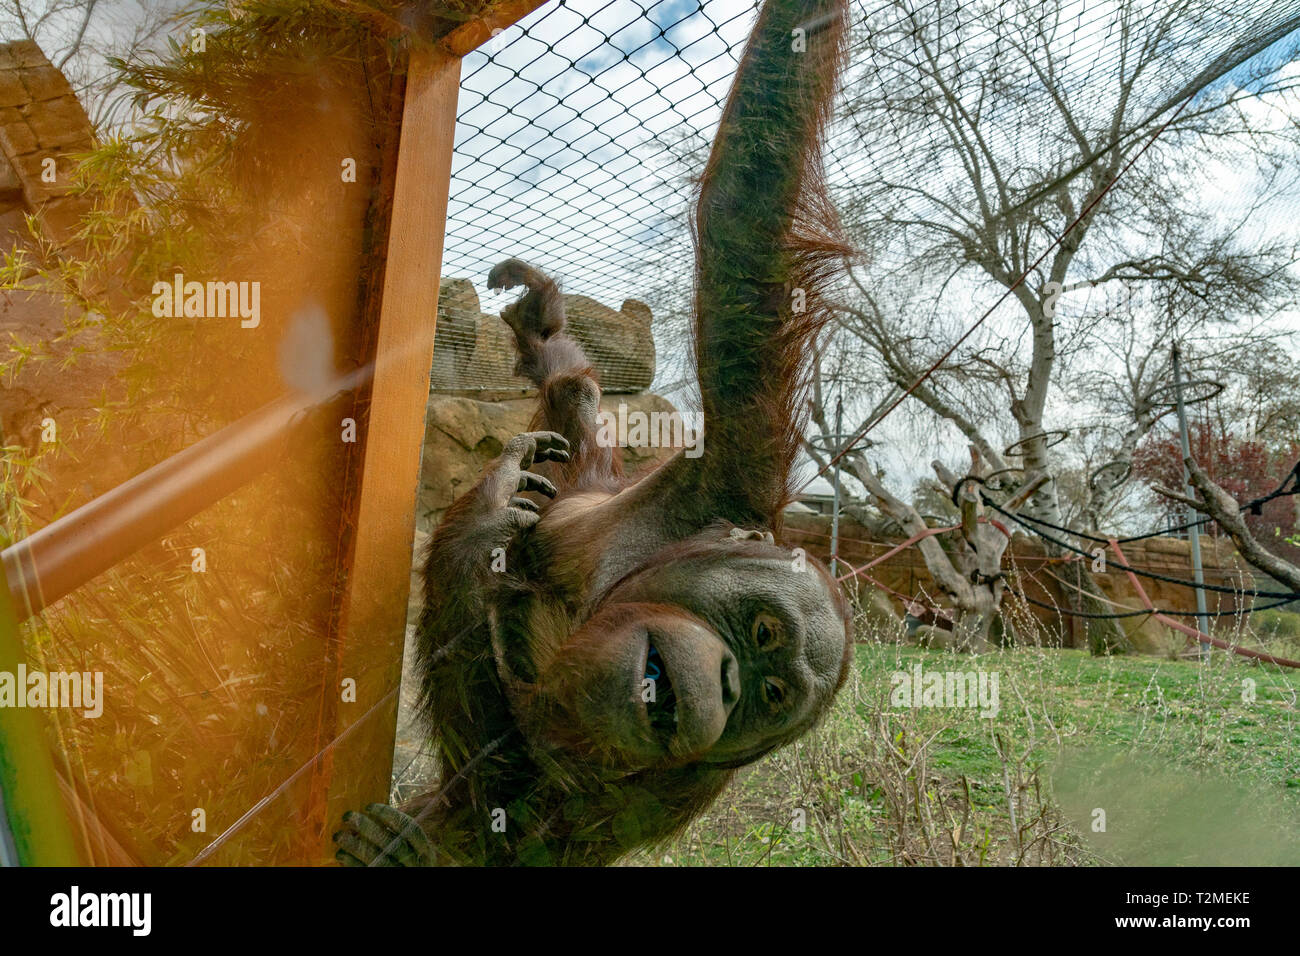 zoo newborn baby orang utan monkey Stock Photo - Alamy